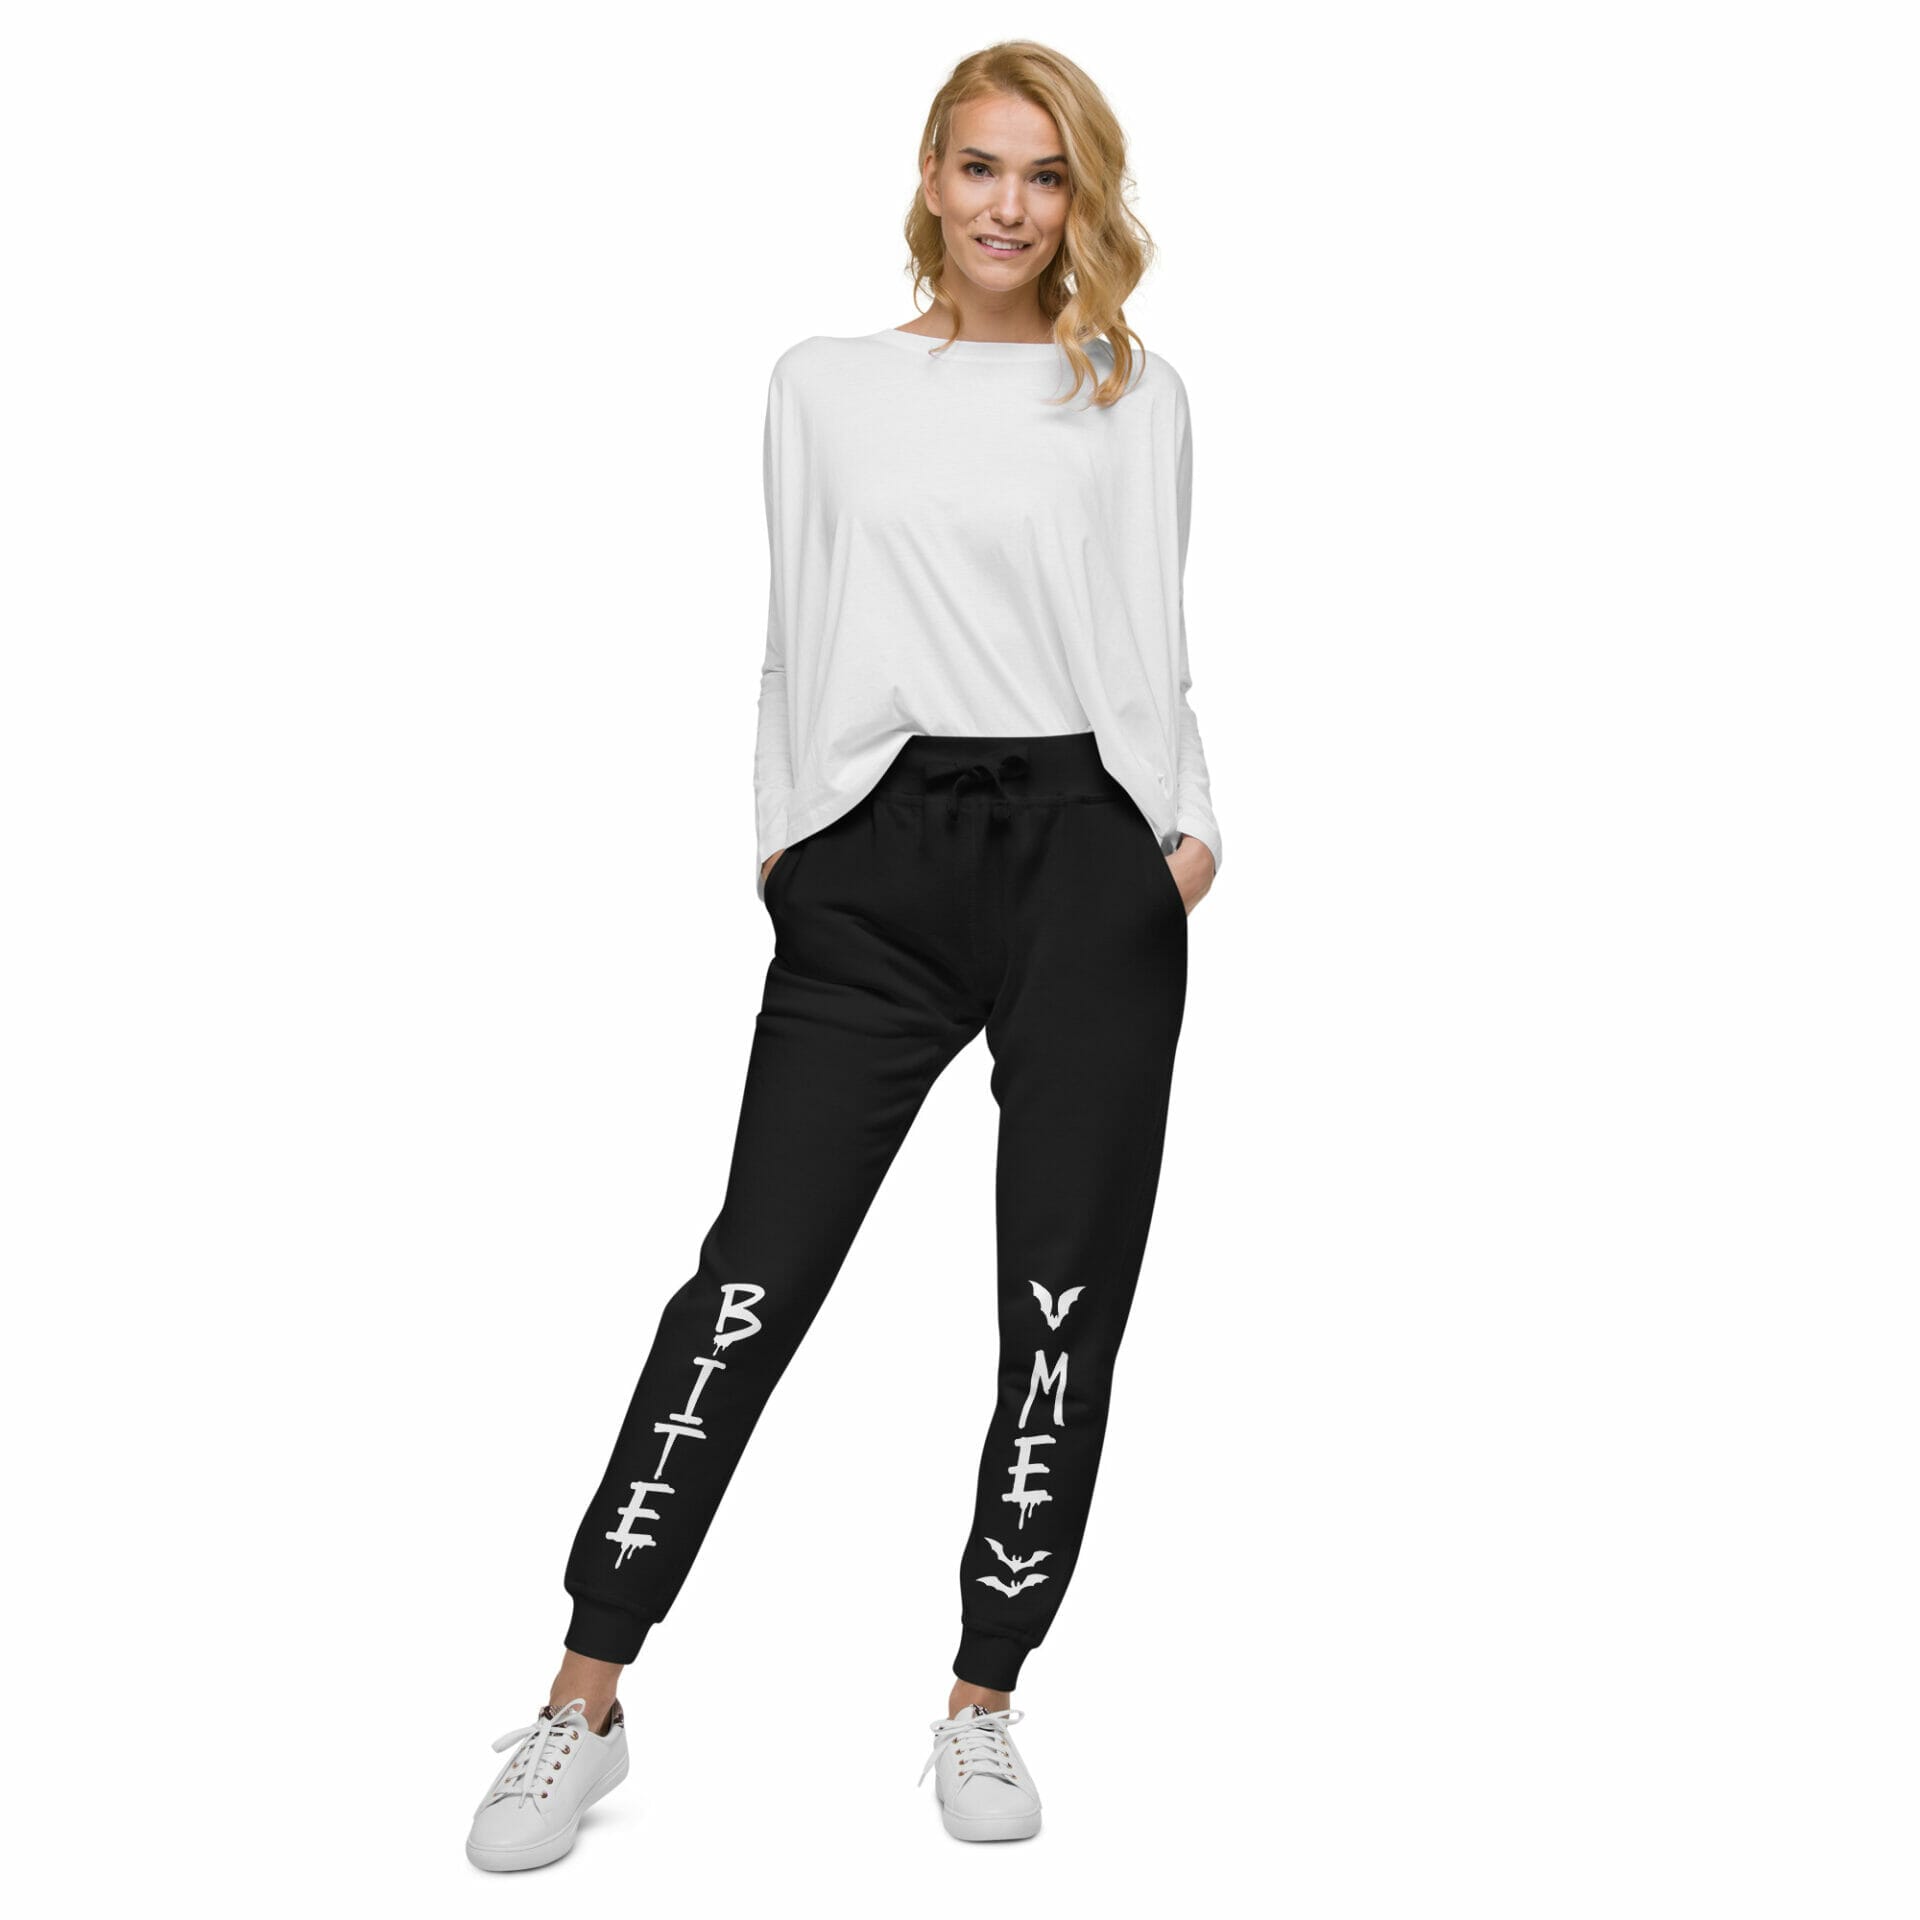 unisex-fleece-sweatpants-black-front-6495cd37e50b6.jpg